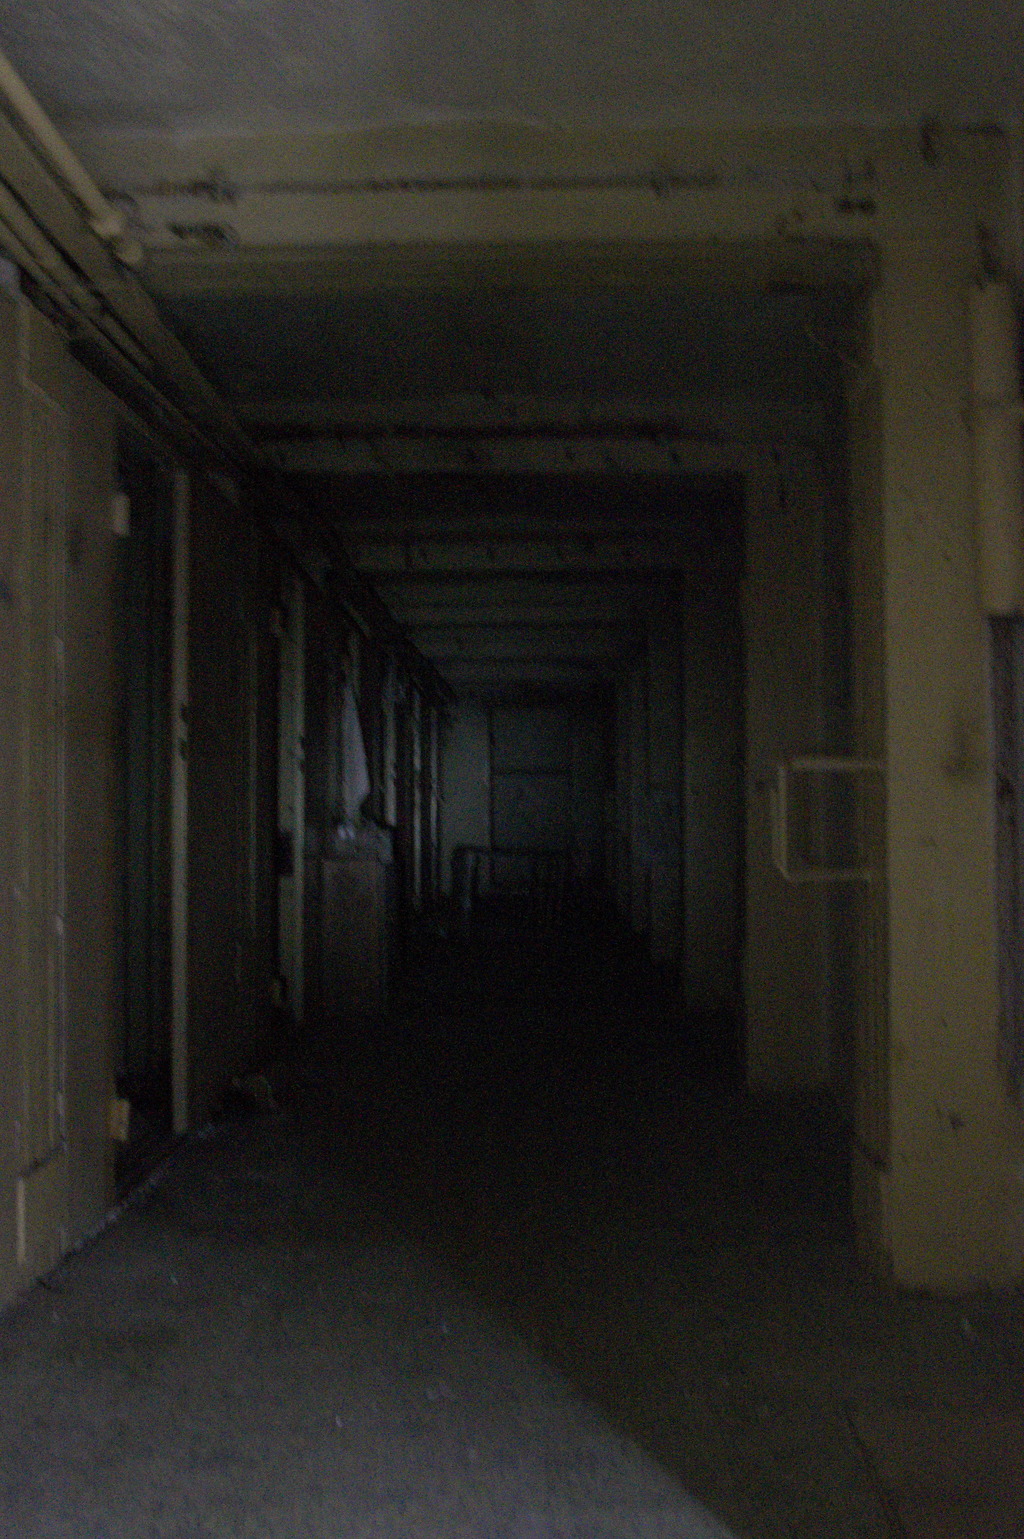 The Stasi bunker near Halle